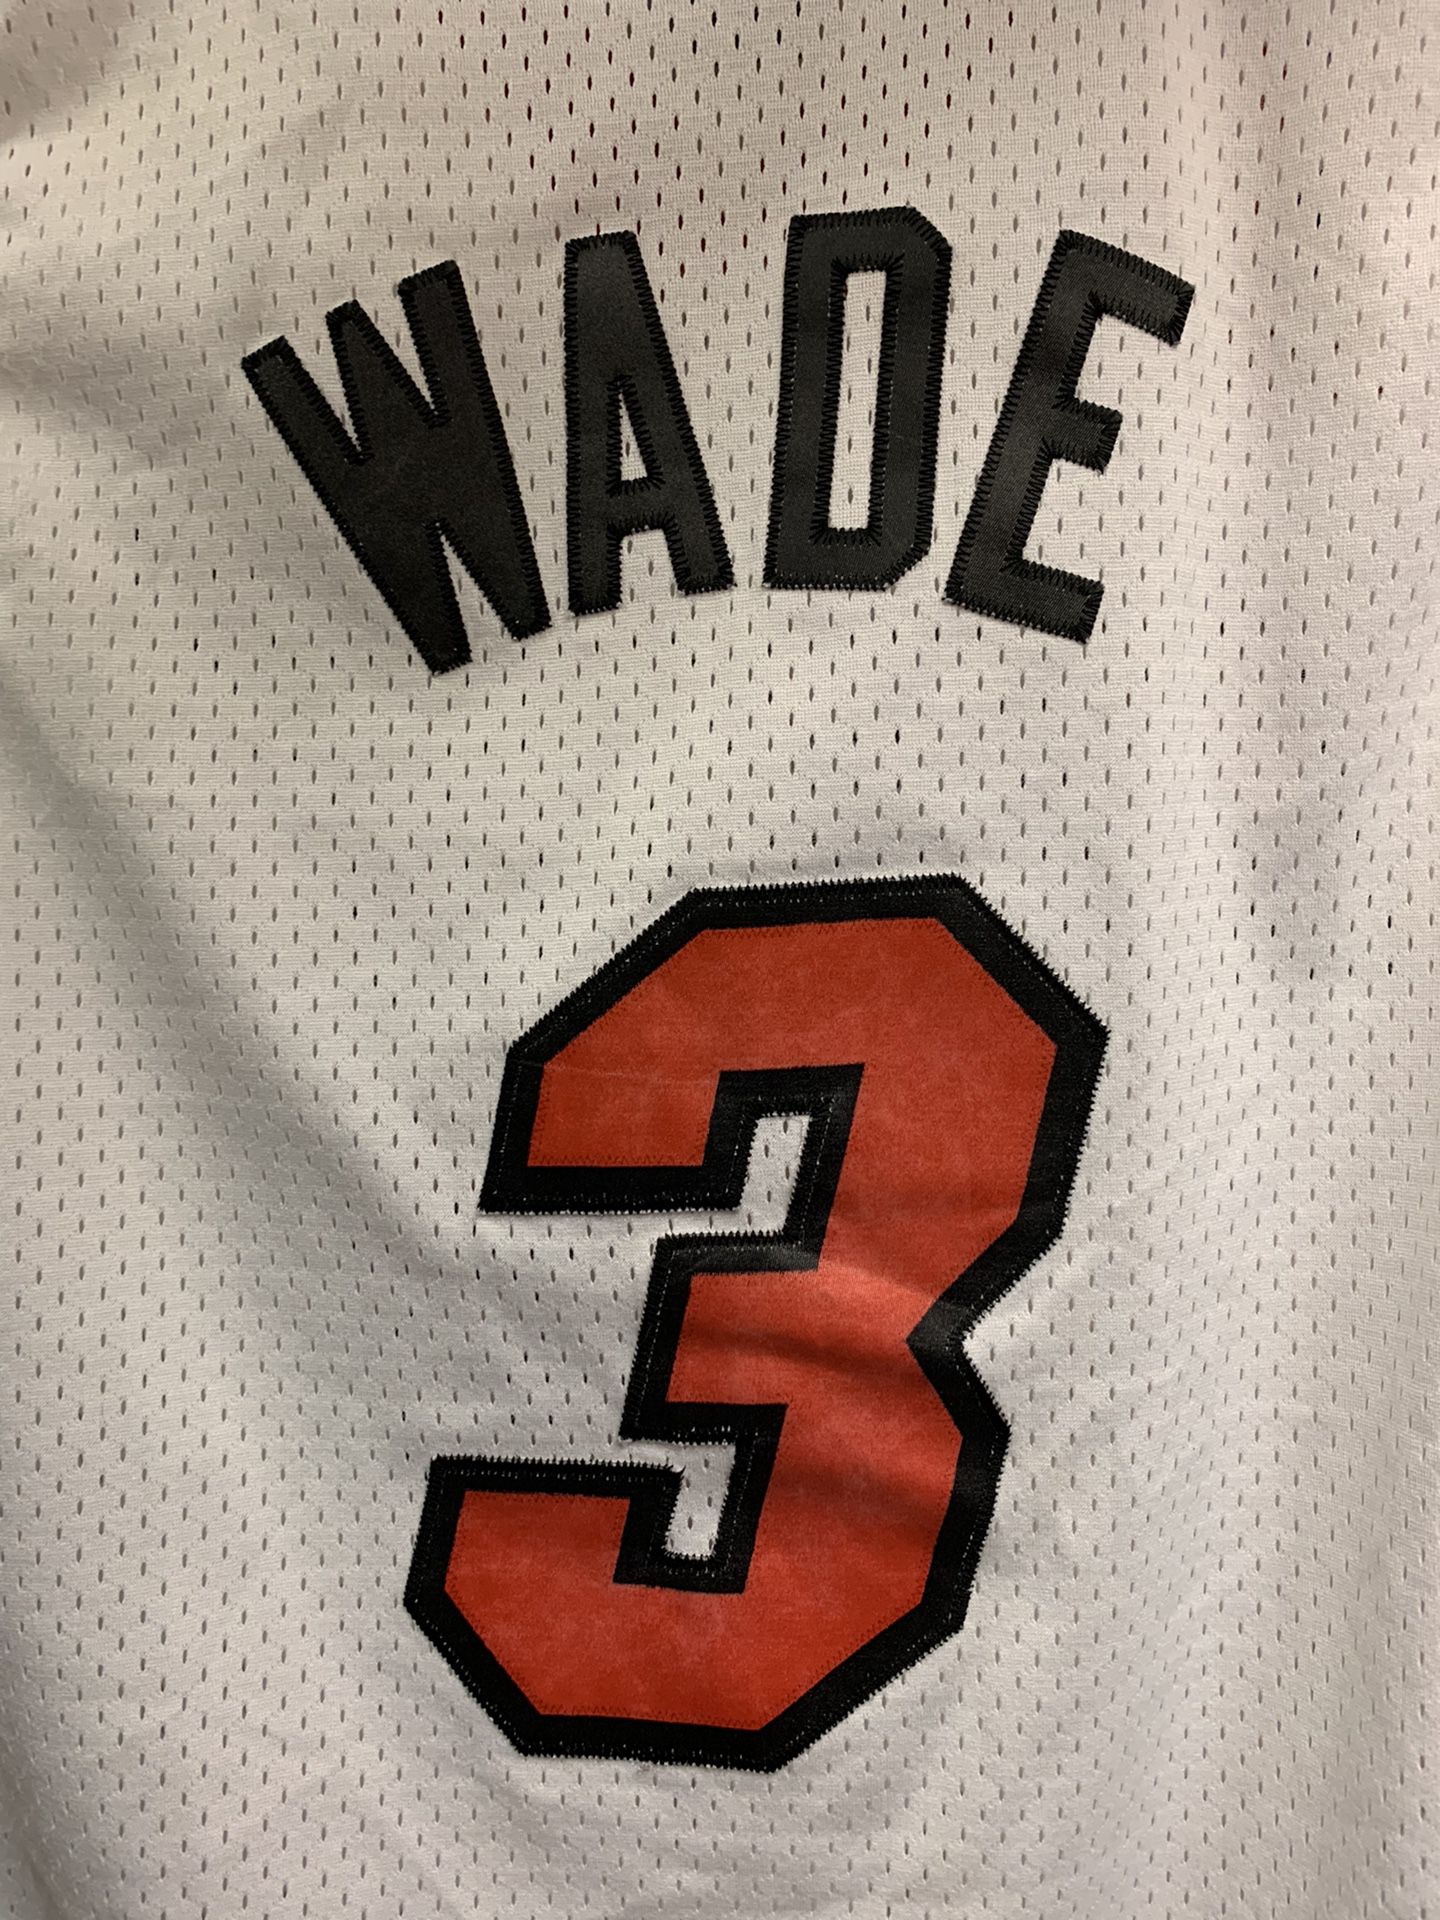 Authentic Vintage Reebok NBA Miami Heat Dwyane Wade Basketball Jersey